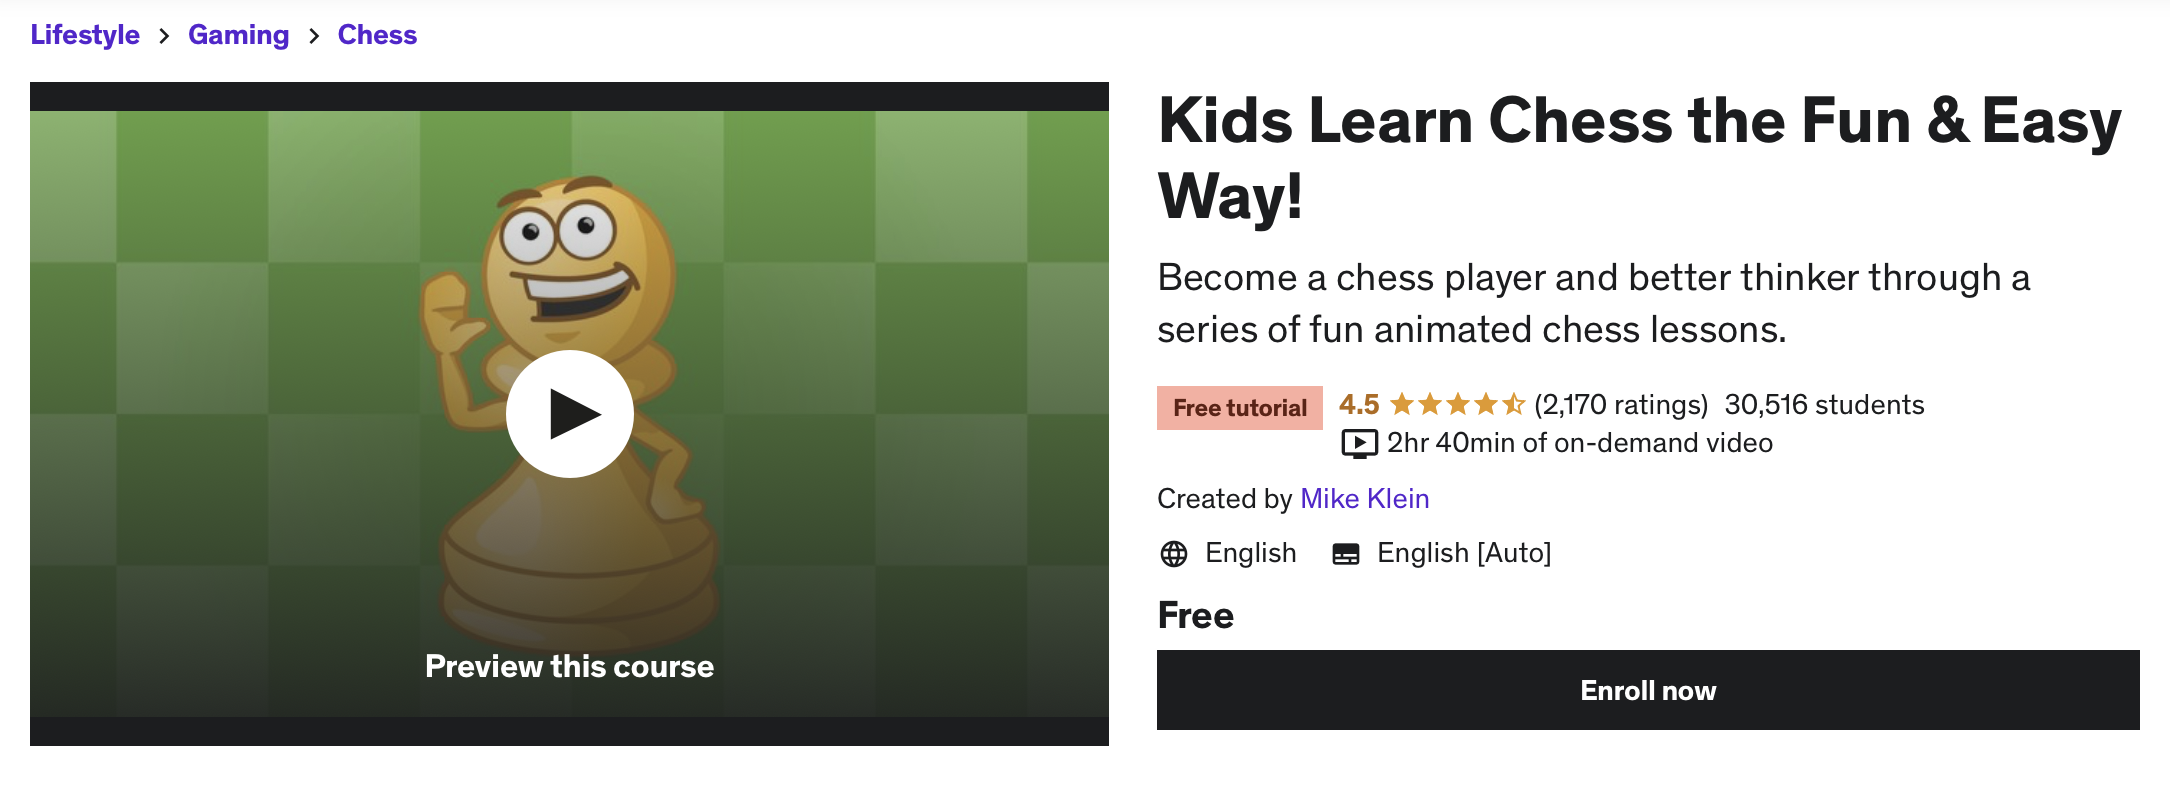 Kids Learn Chess the Fun & Easy Way!